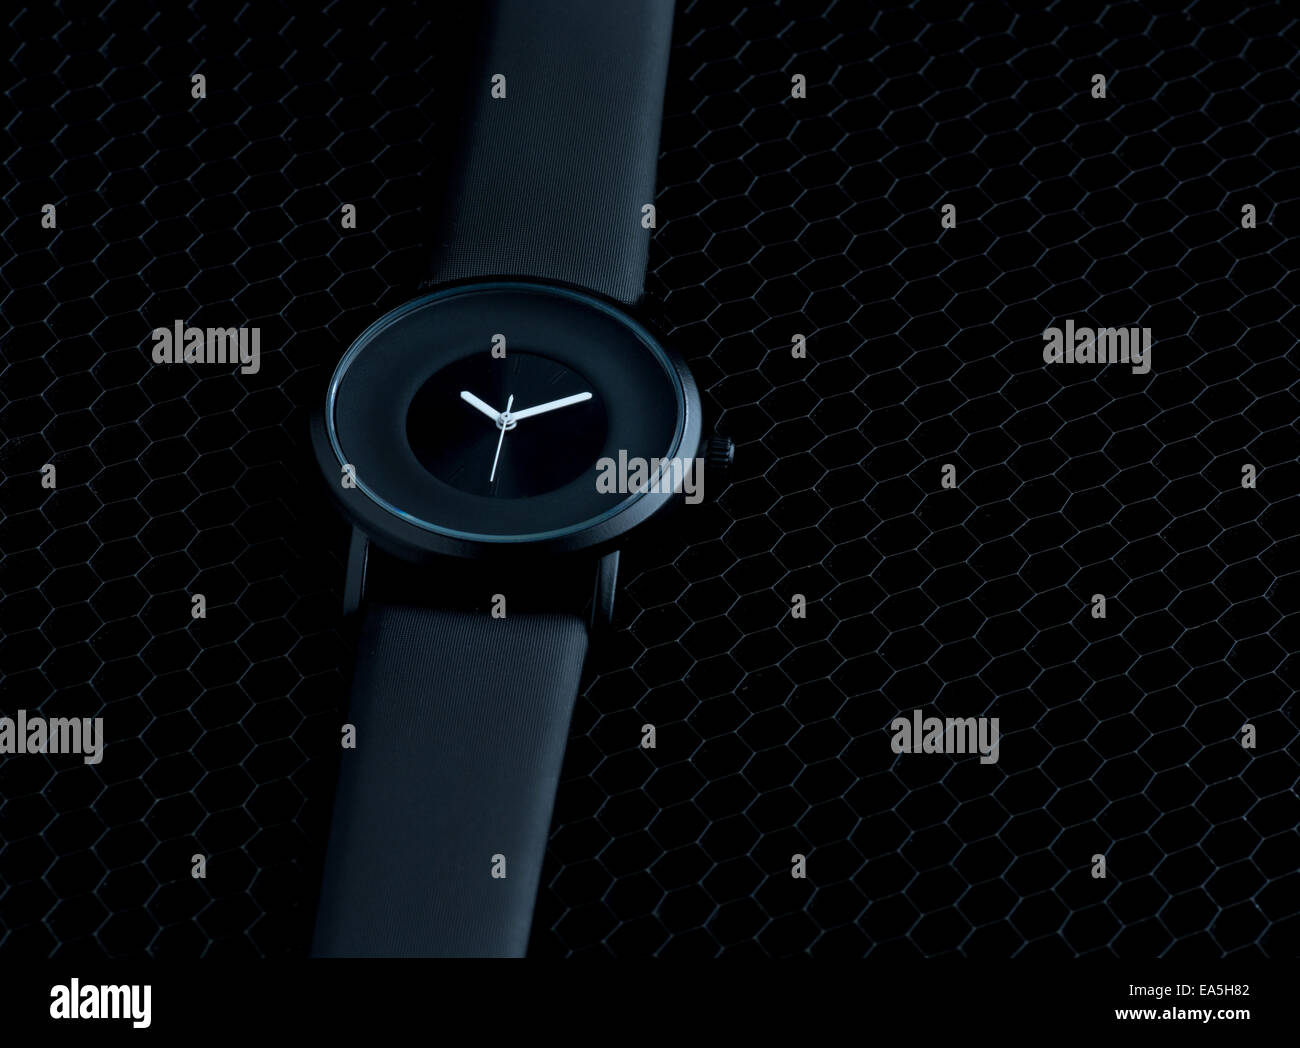 wrist watch on a dark background close up Stock Photo